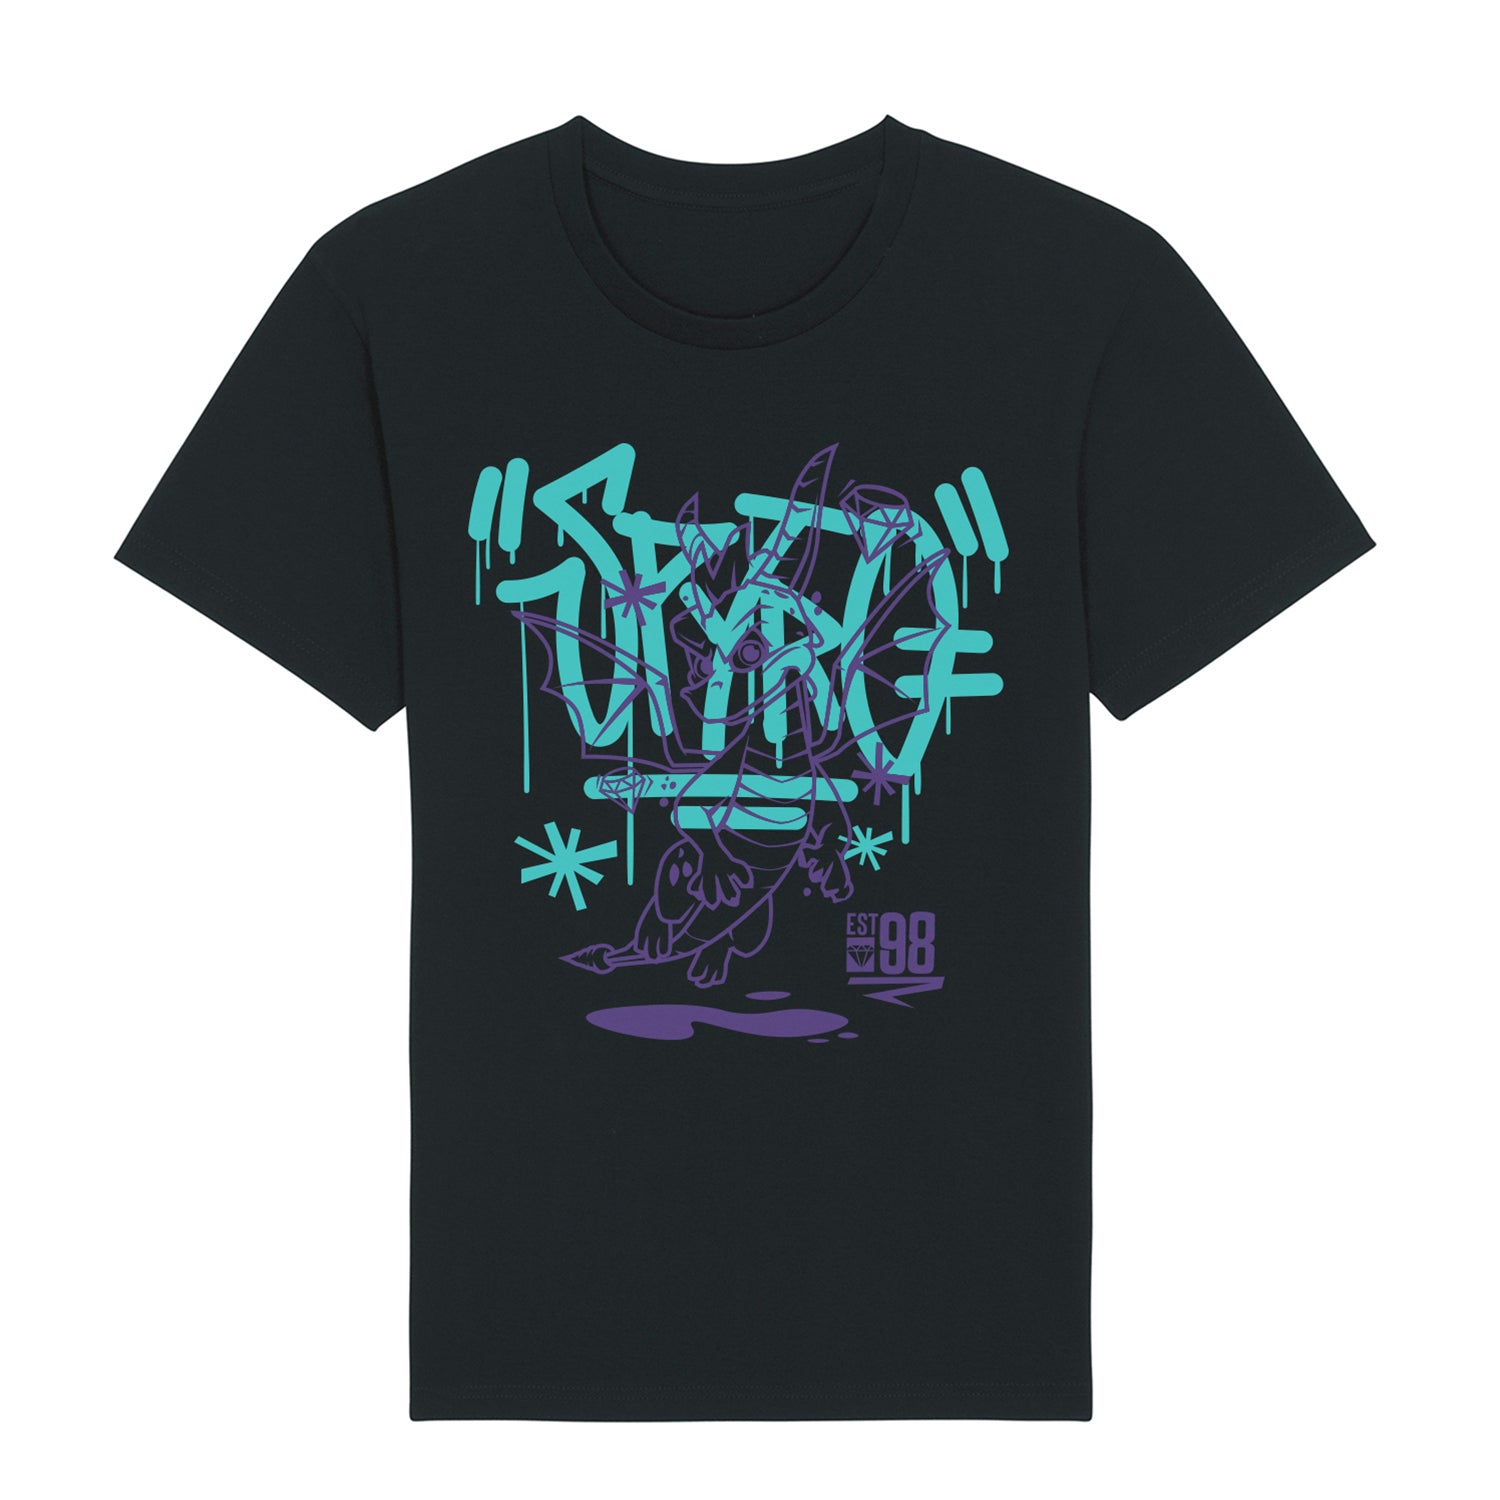 Spyro Street Art Unisex T-Shirt, Casual Fit Black Crew Neck